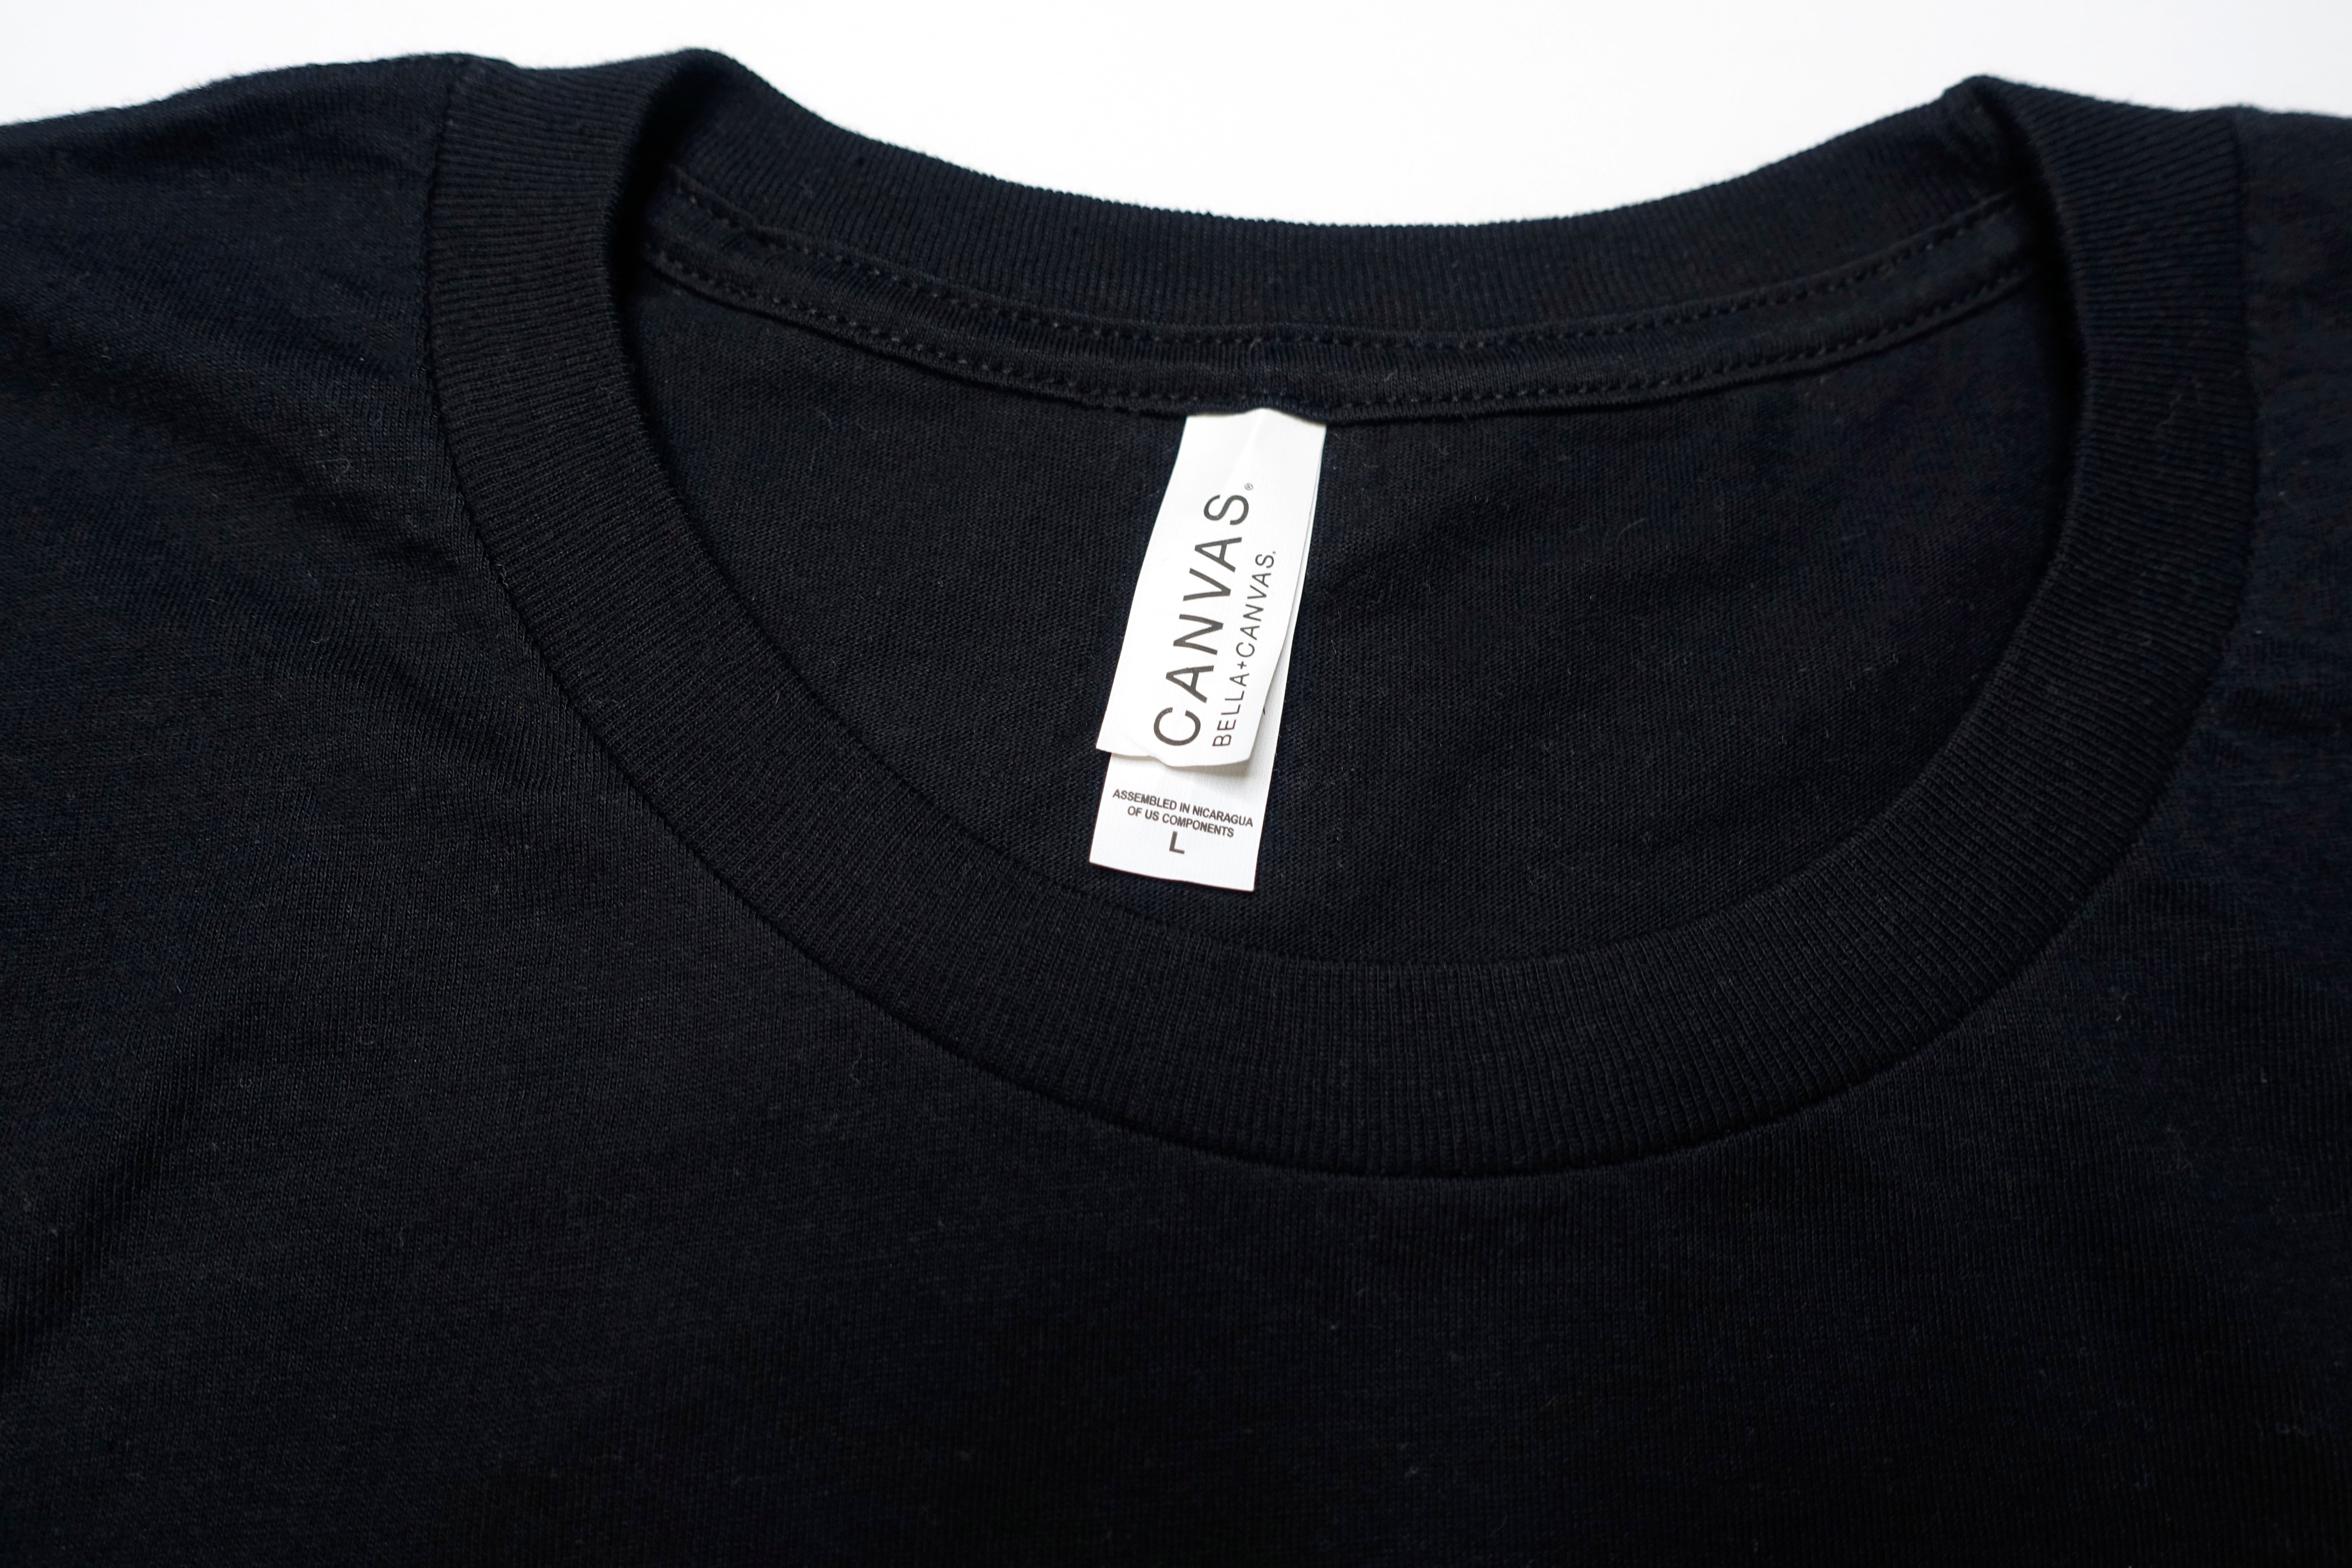 Hot Chip - Why Make Sense? 2015 Tour Shirt (Black) Size Large